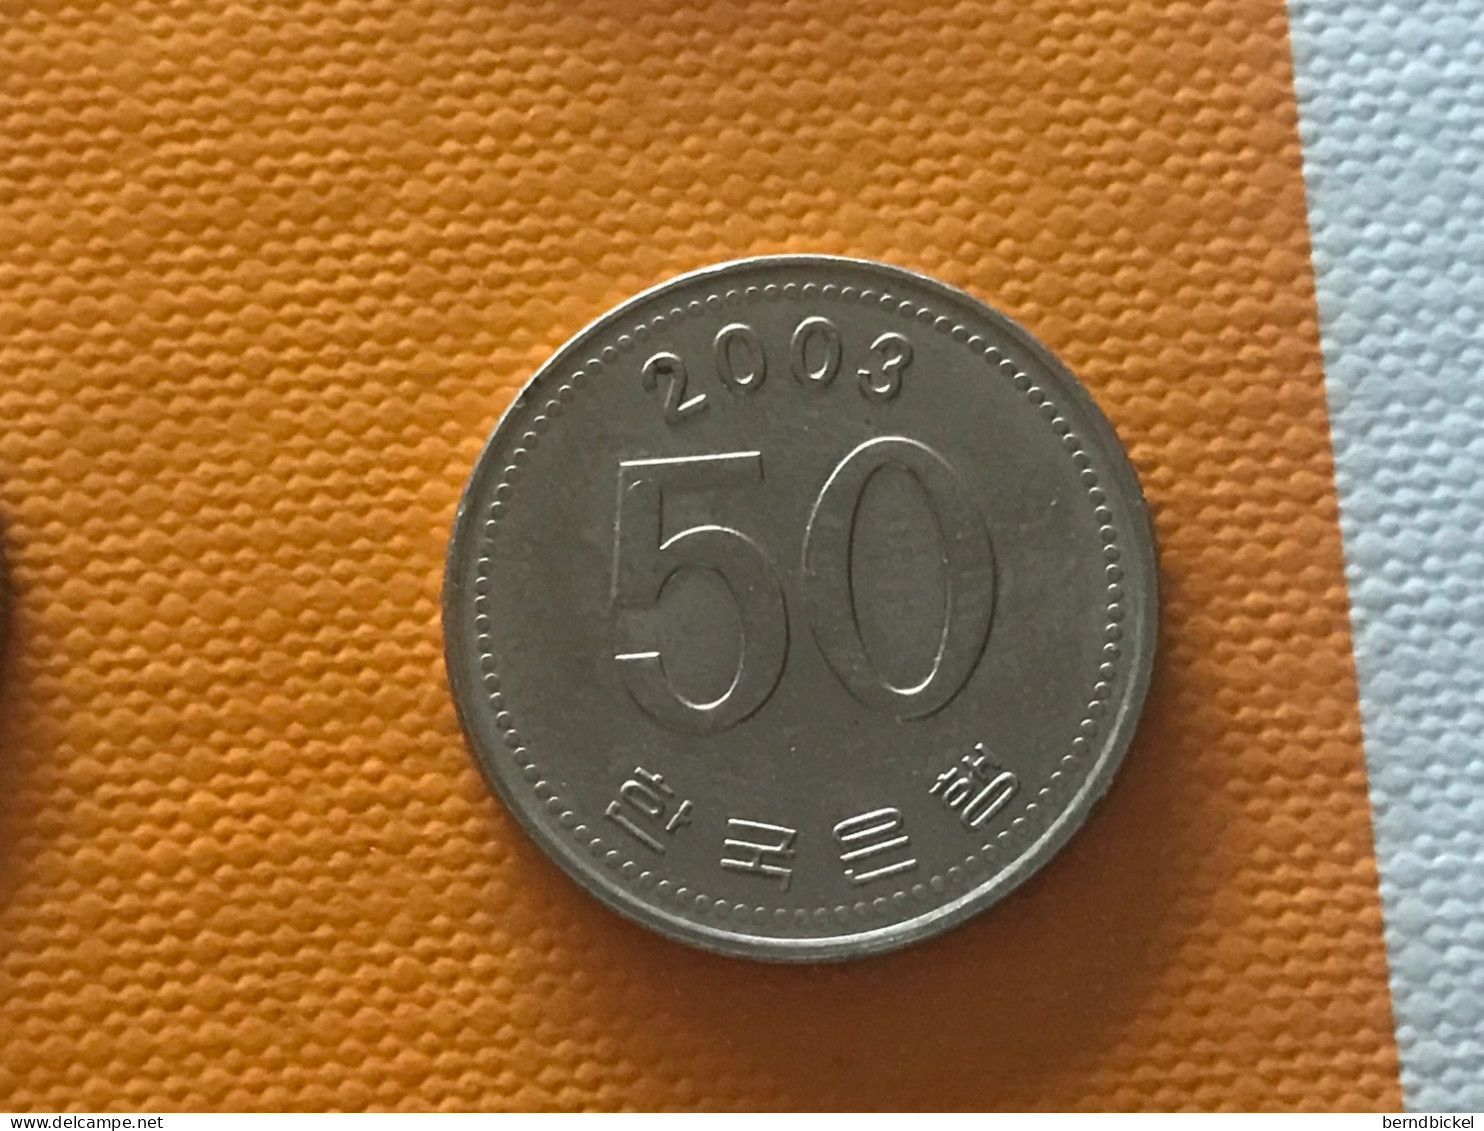 Münze Münzen Umlaufmünze Südkorea 50 Won 2003 - Korea (Zuid)